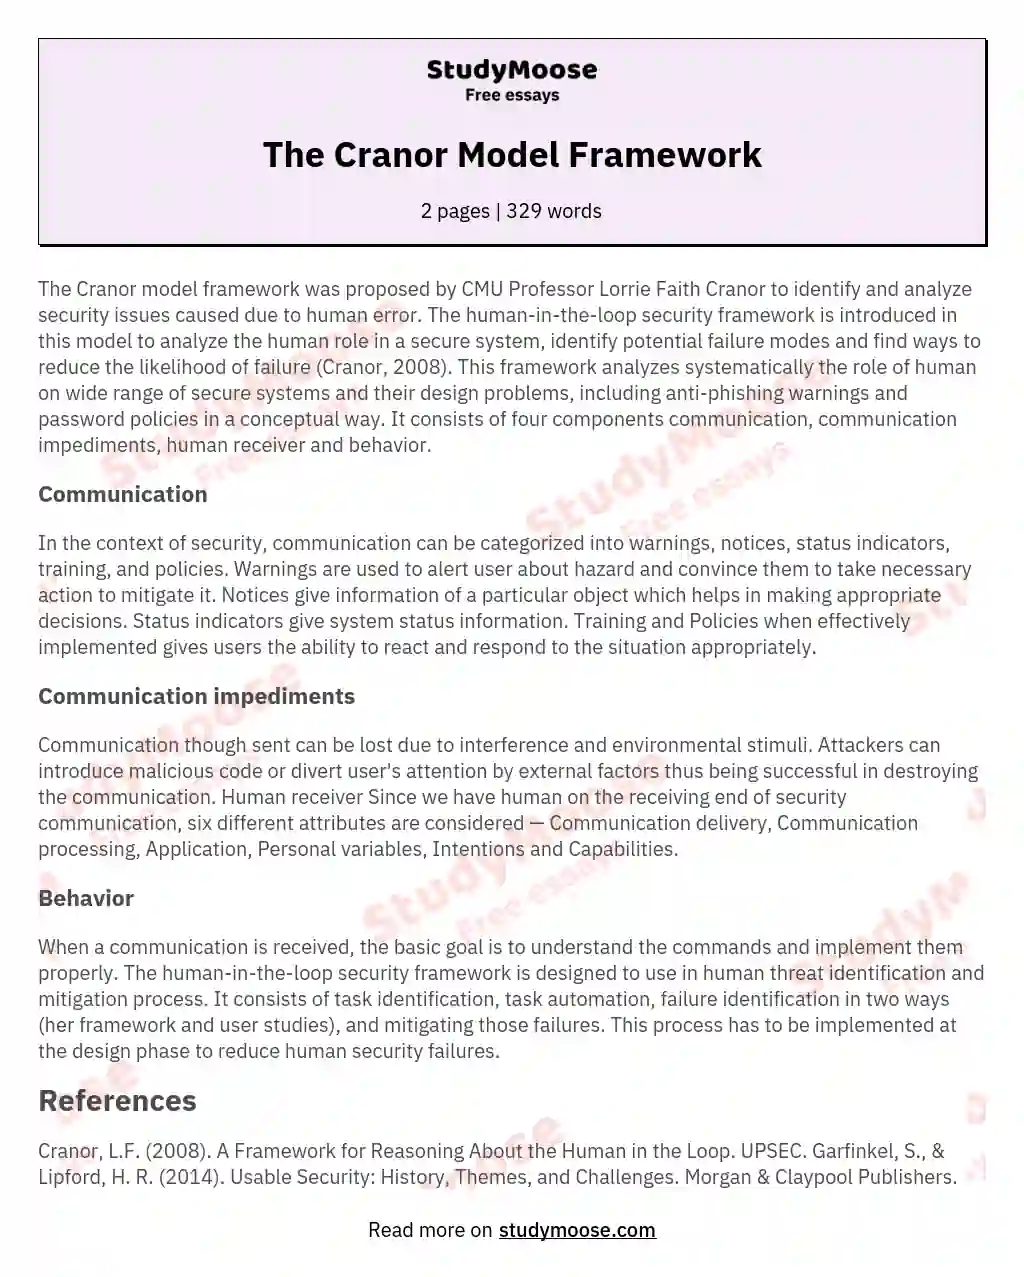 The Cranor Model Framework essay